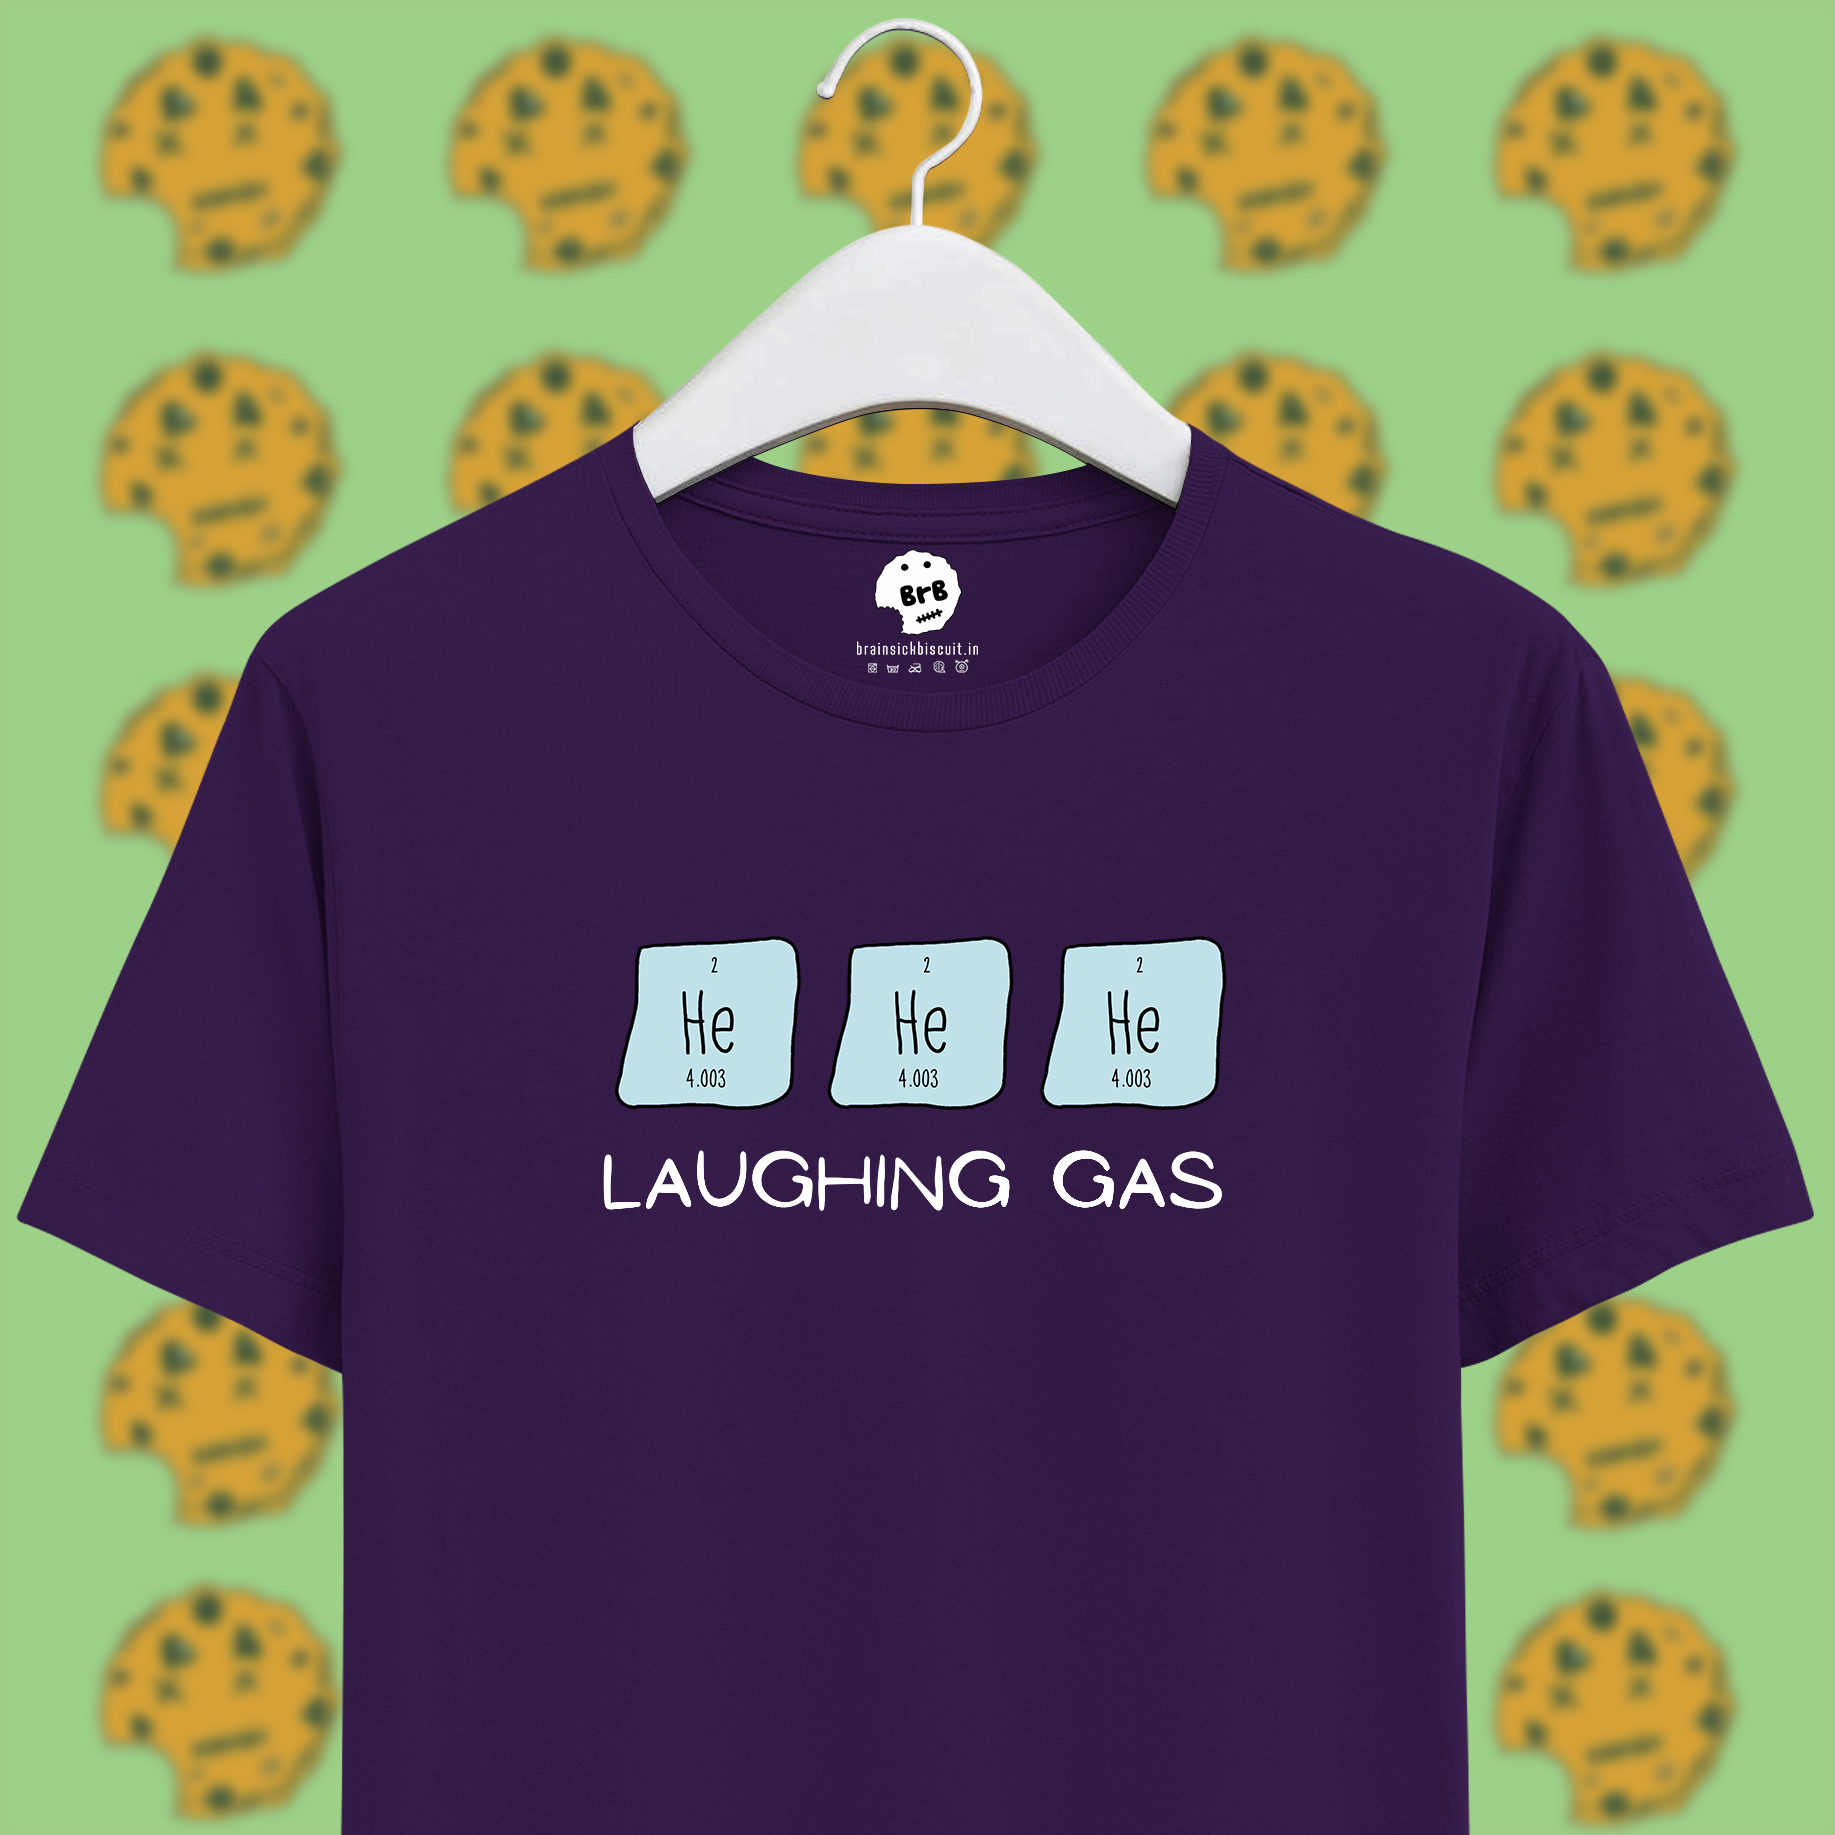 Laughing gas helium joke pun on purple unisex half sleeves unisex cotton t-shirt.